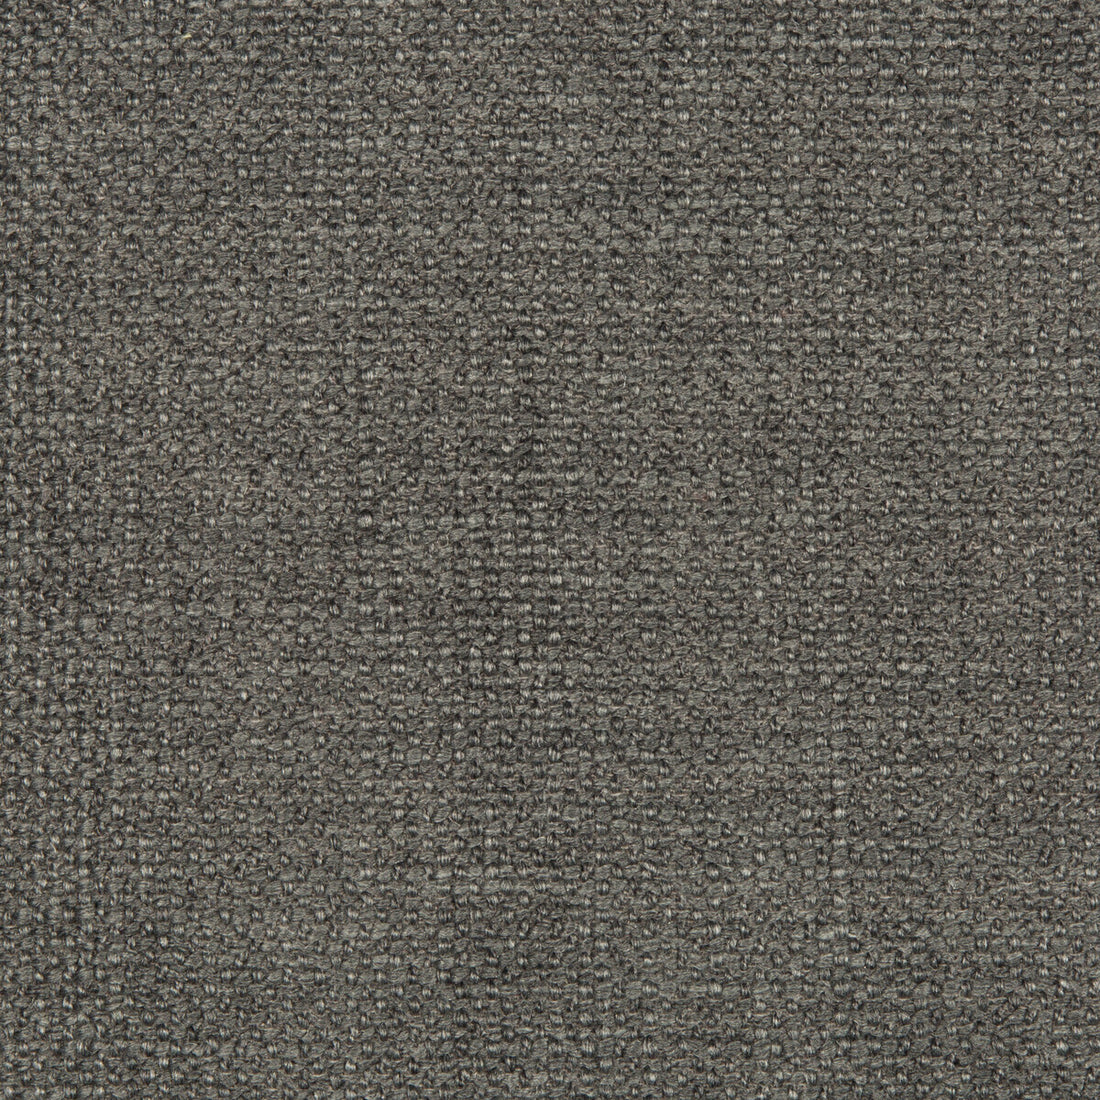 Kravet Smart fabric in 35379-21 color - pattern 35379.21.0 - by Kravet Smart in the Performance Kravetarmor collection